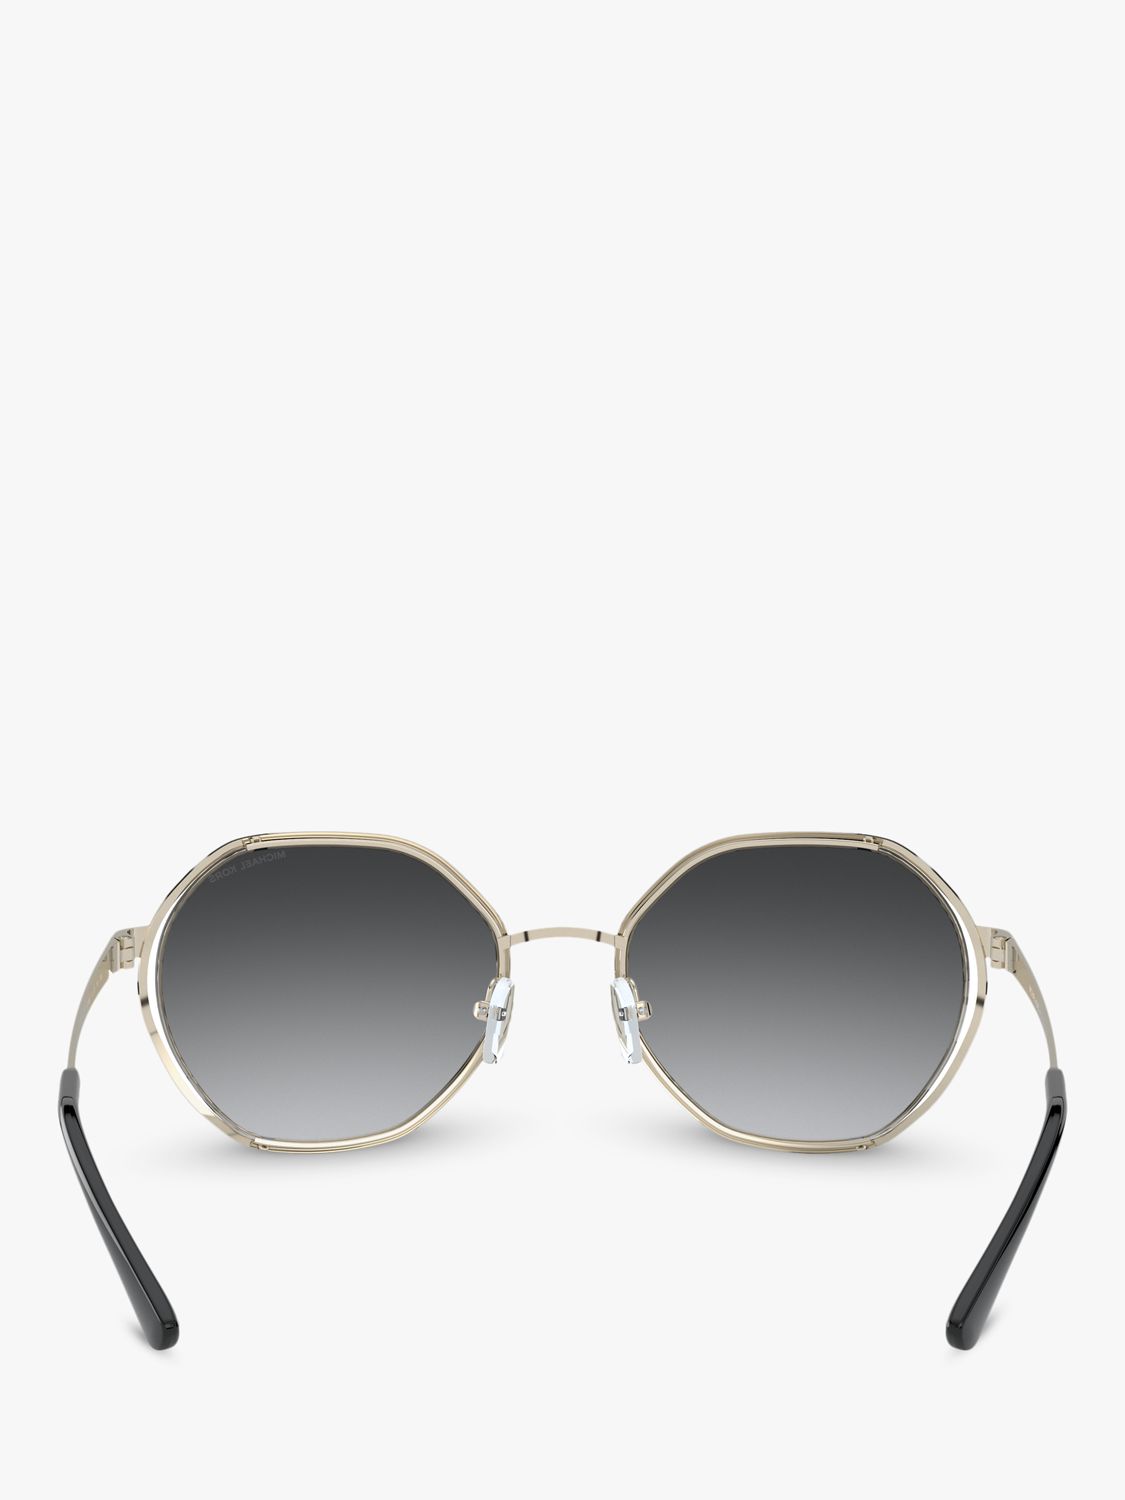 Michael Kors MK1072 Women's Porto Round Sunglasses, Silver/Black ...